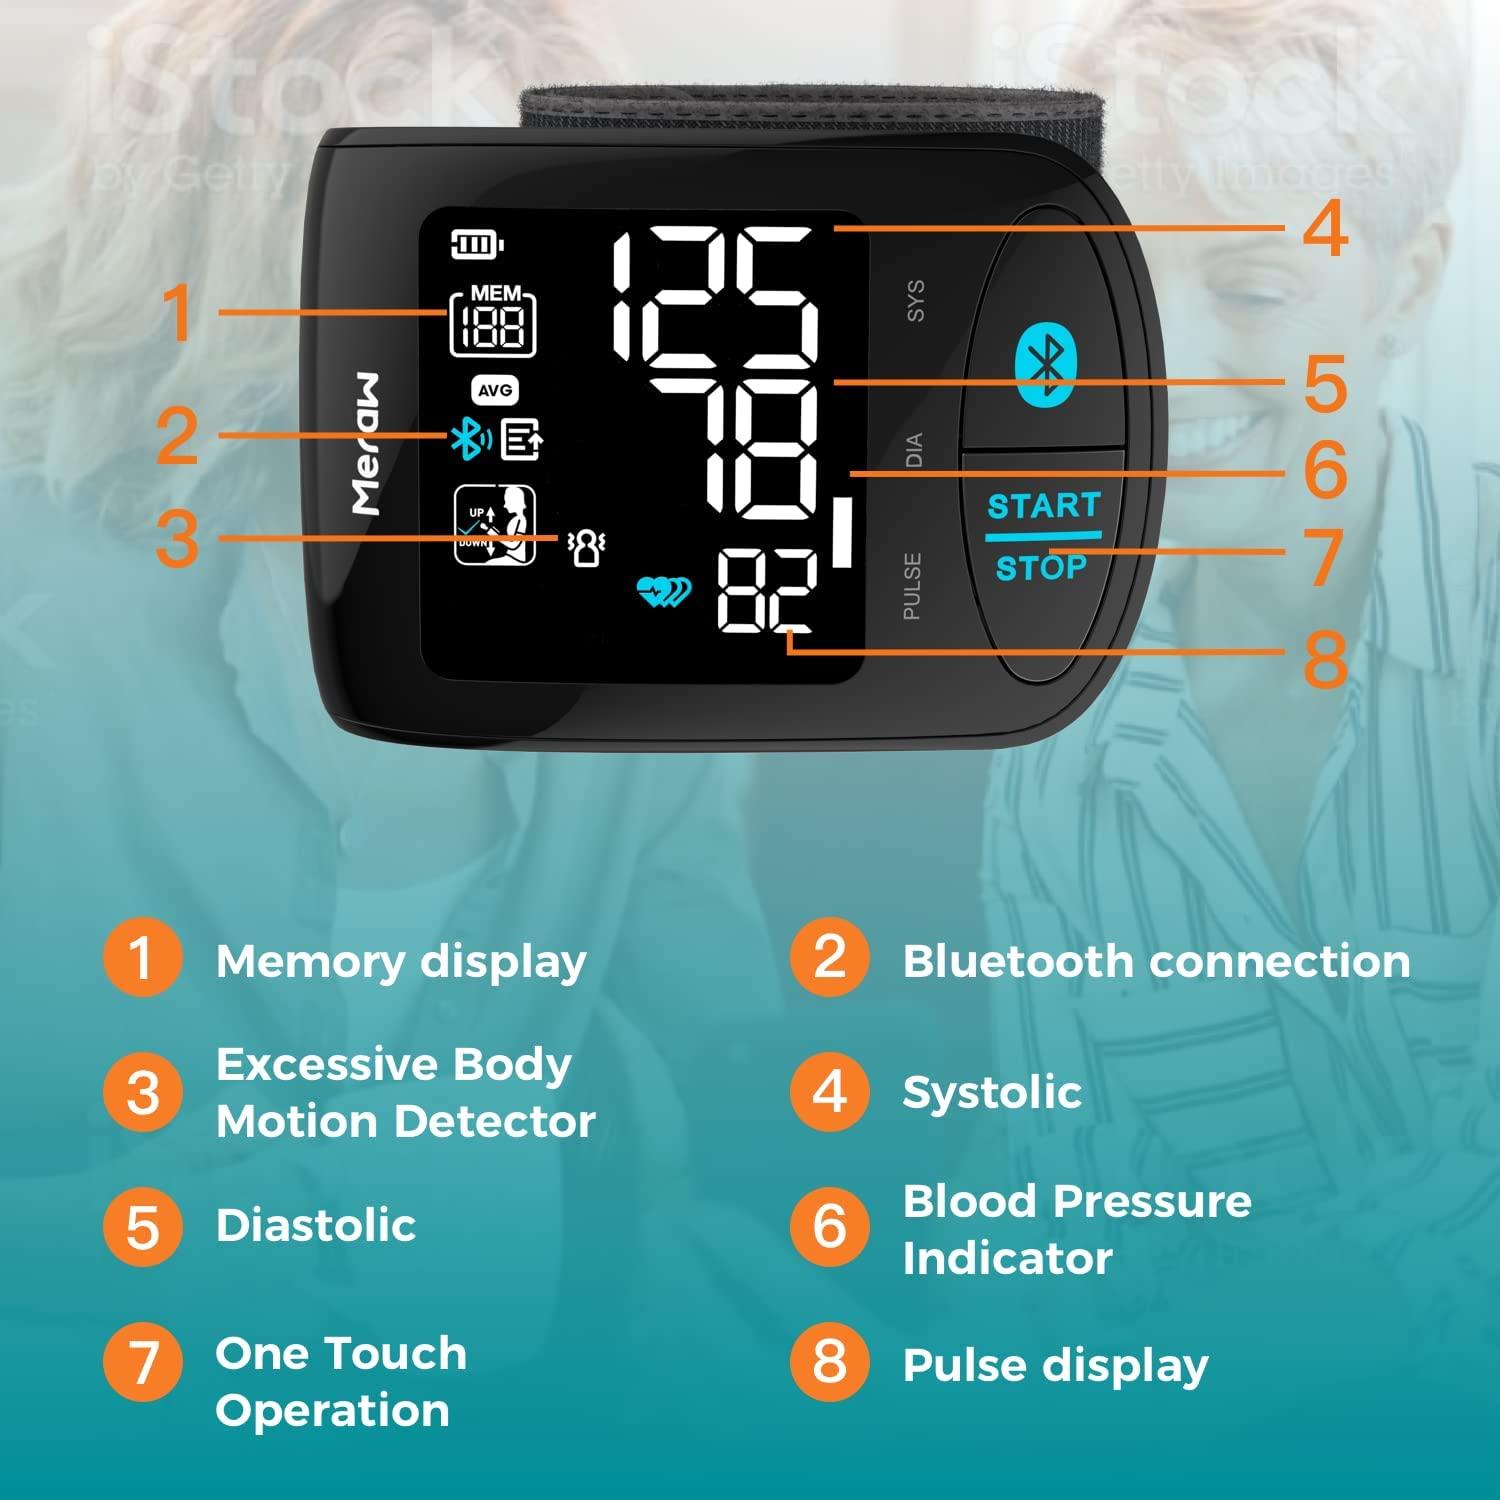 Meraw Bluetooth Blood Pressure Machine, High Accuracy Blood